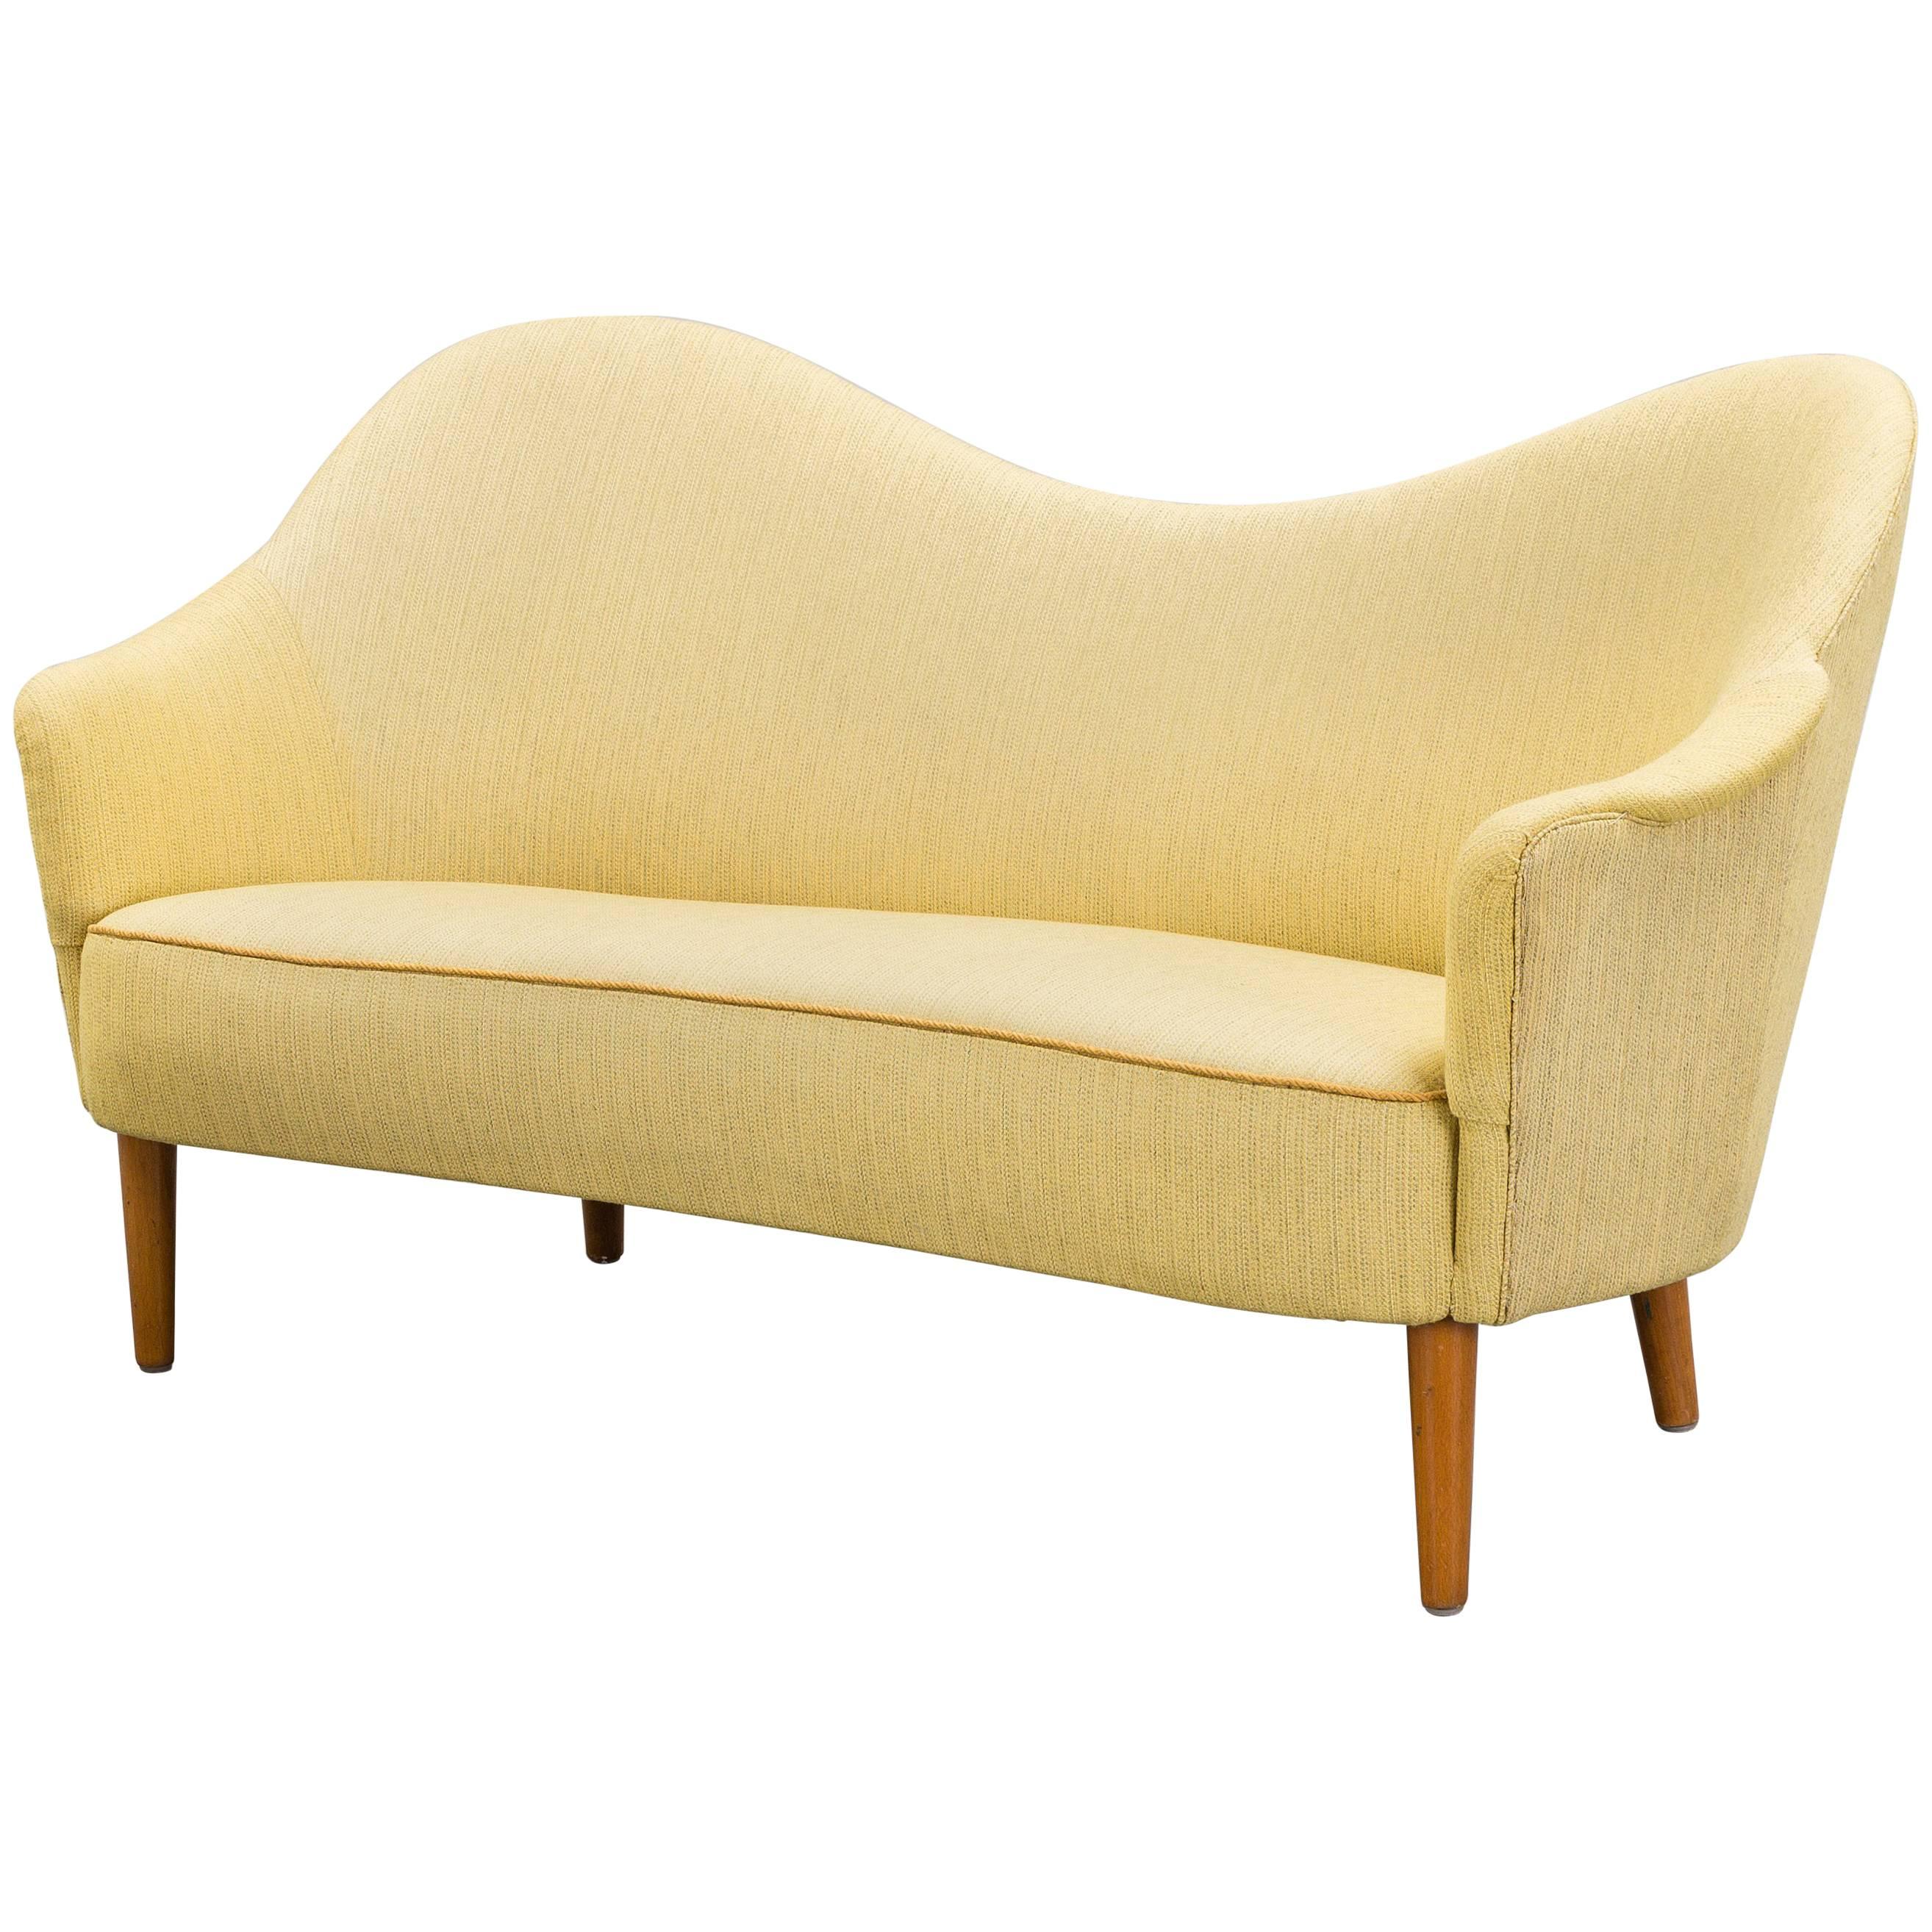 Carl Malmsten curved yellow Samspel sofa / loveseat, mid 20th Century, Sweden.